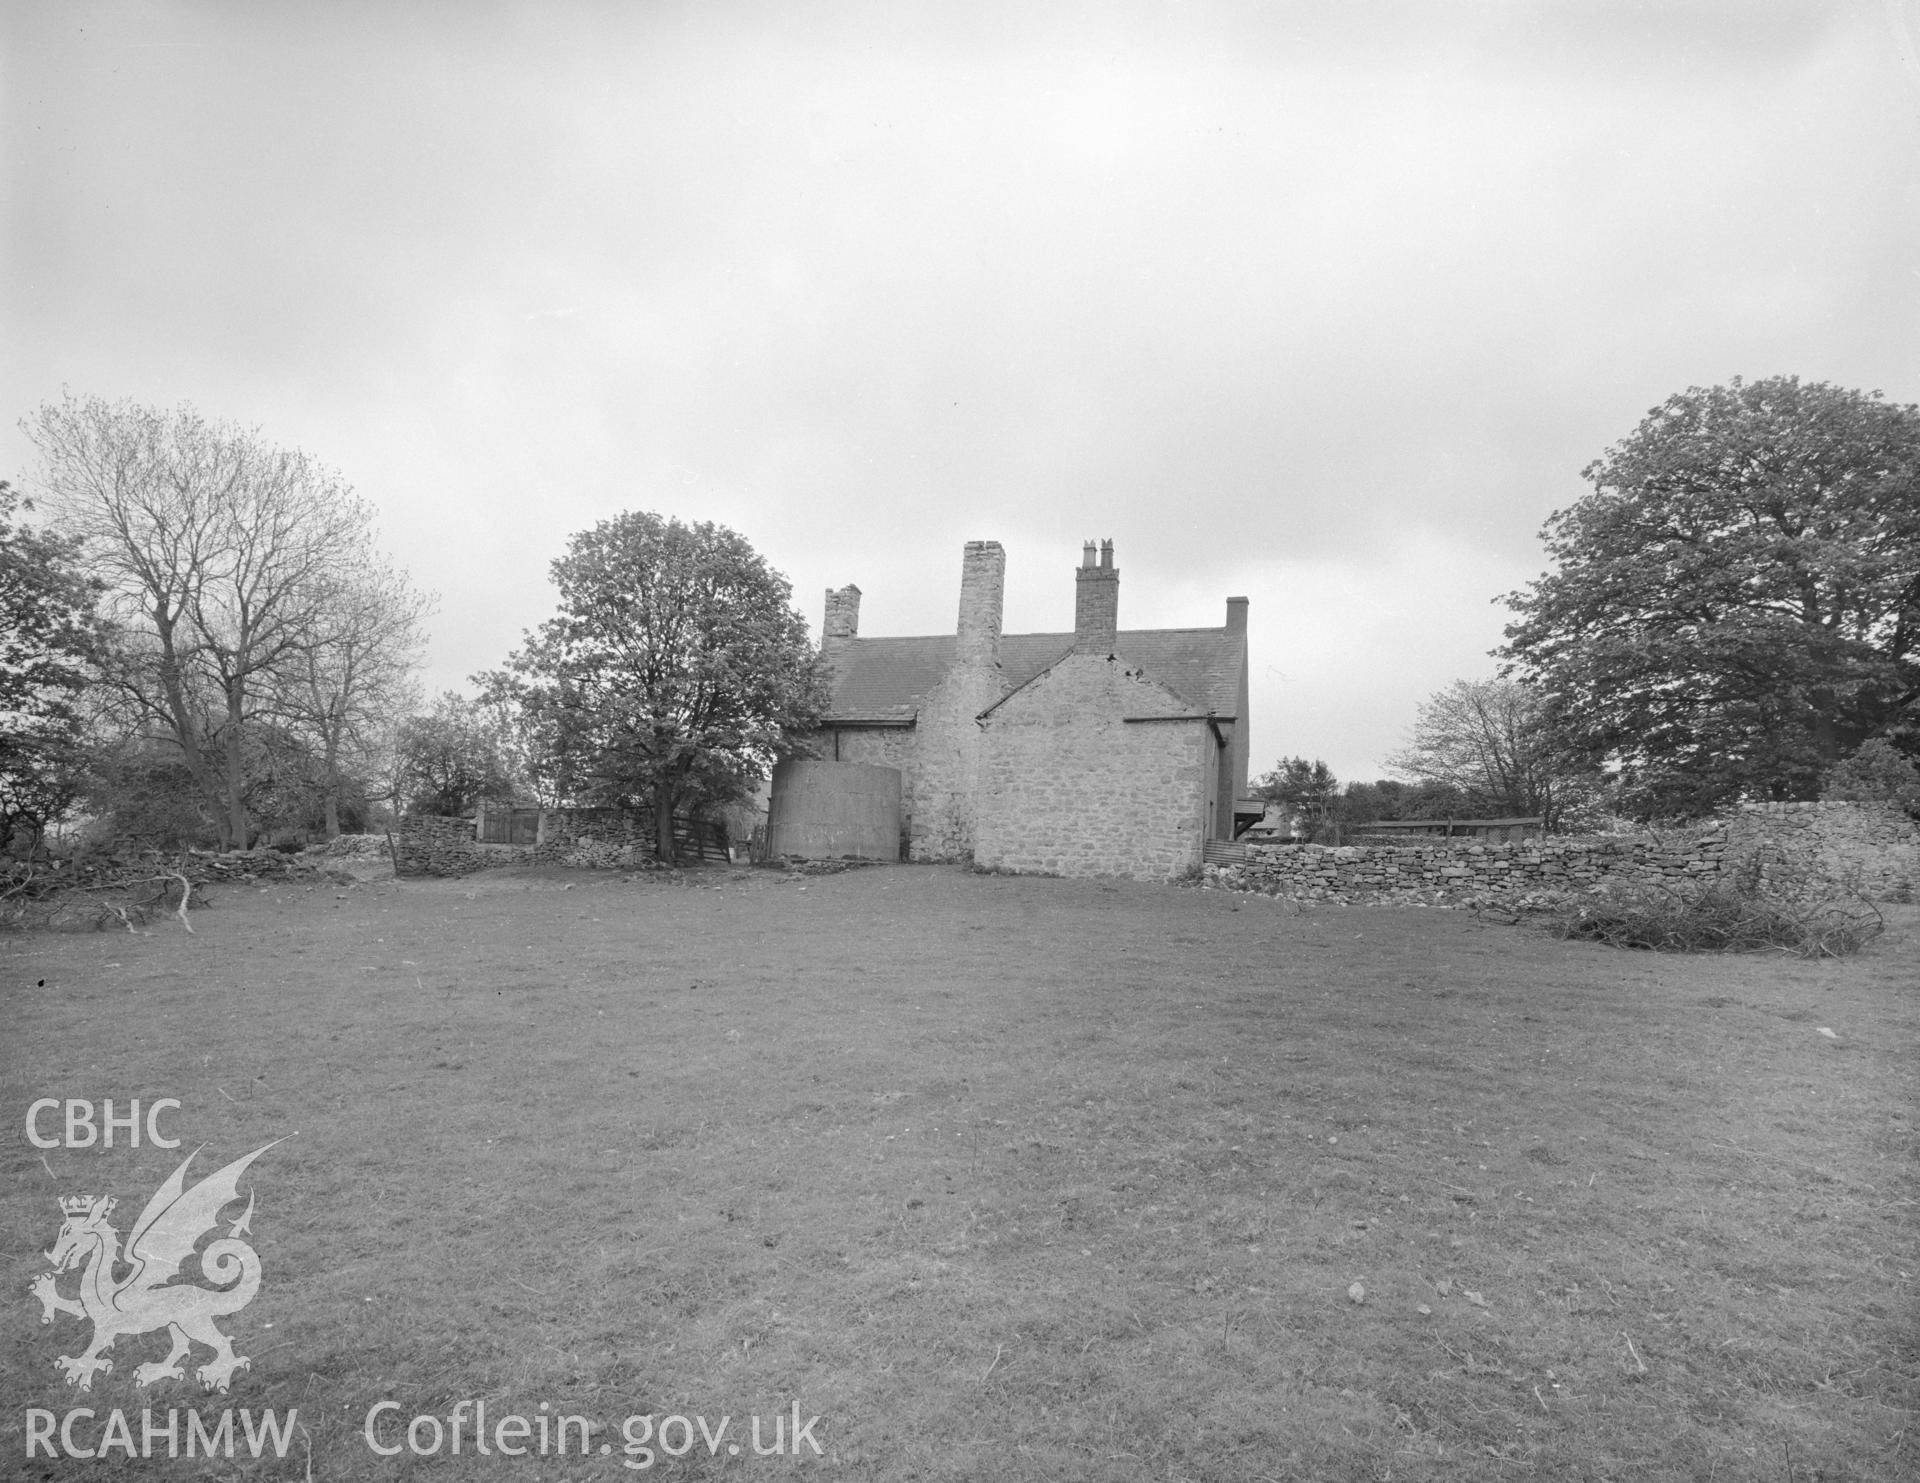 Digital copy of a black and white negative showing exterior rear view of Pen y Cefn, Flintshire.